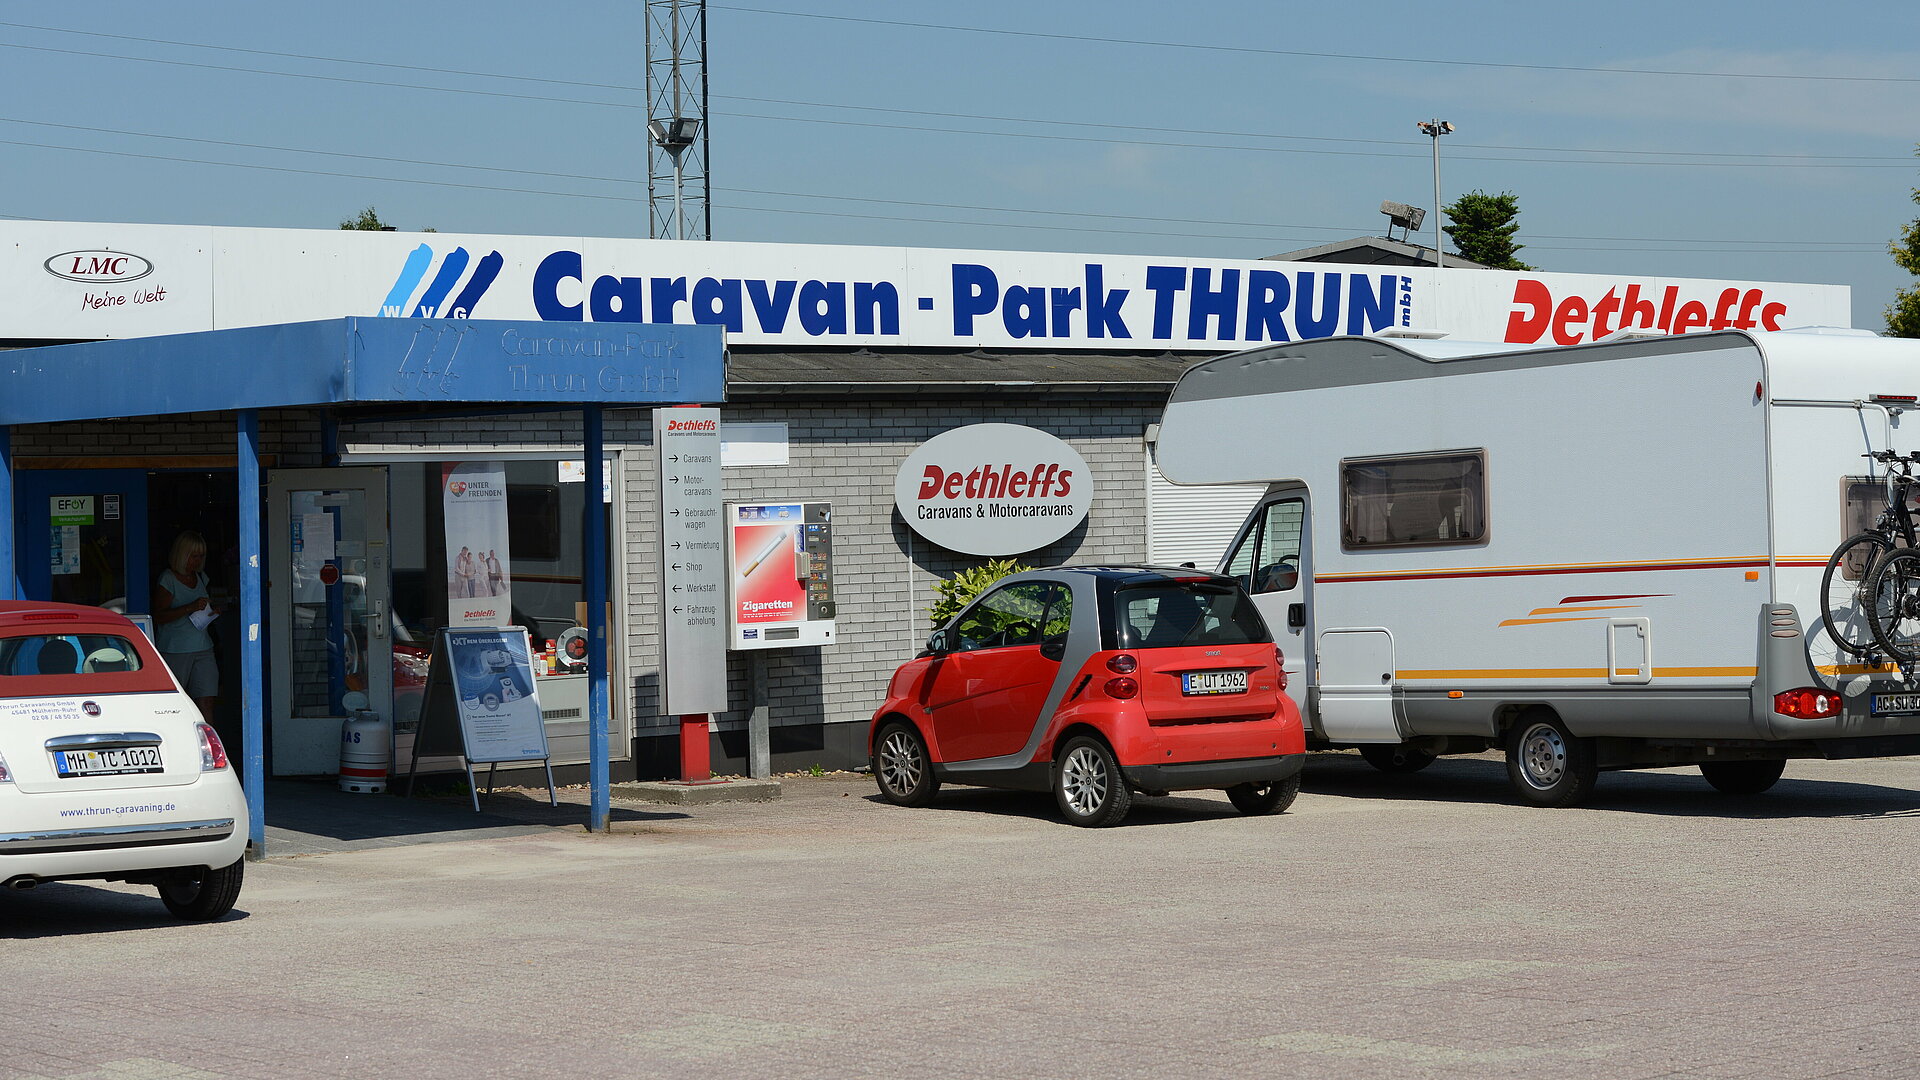 Caravan-Park Thrun in Mülheim an der Ruhr